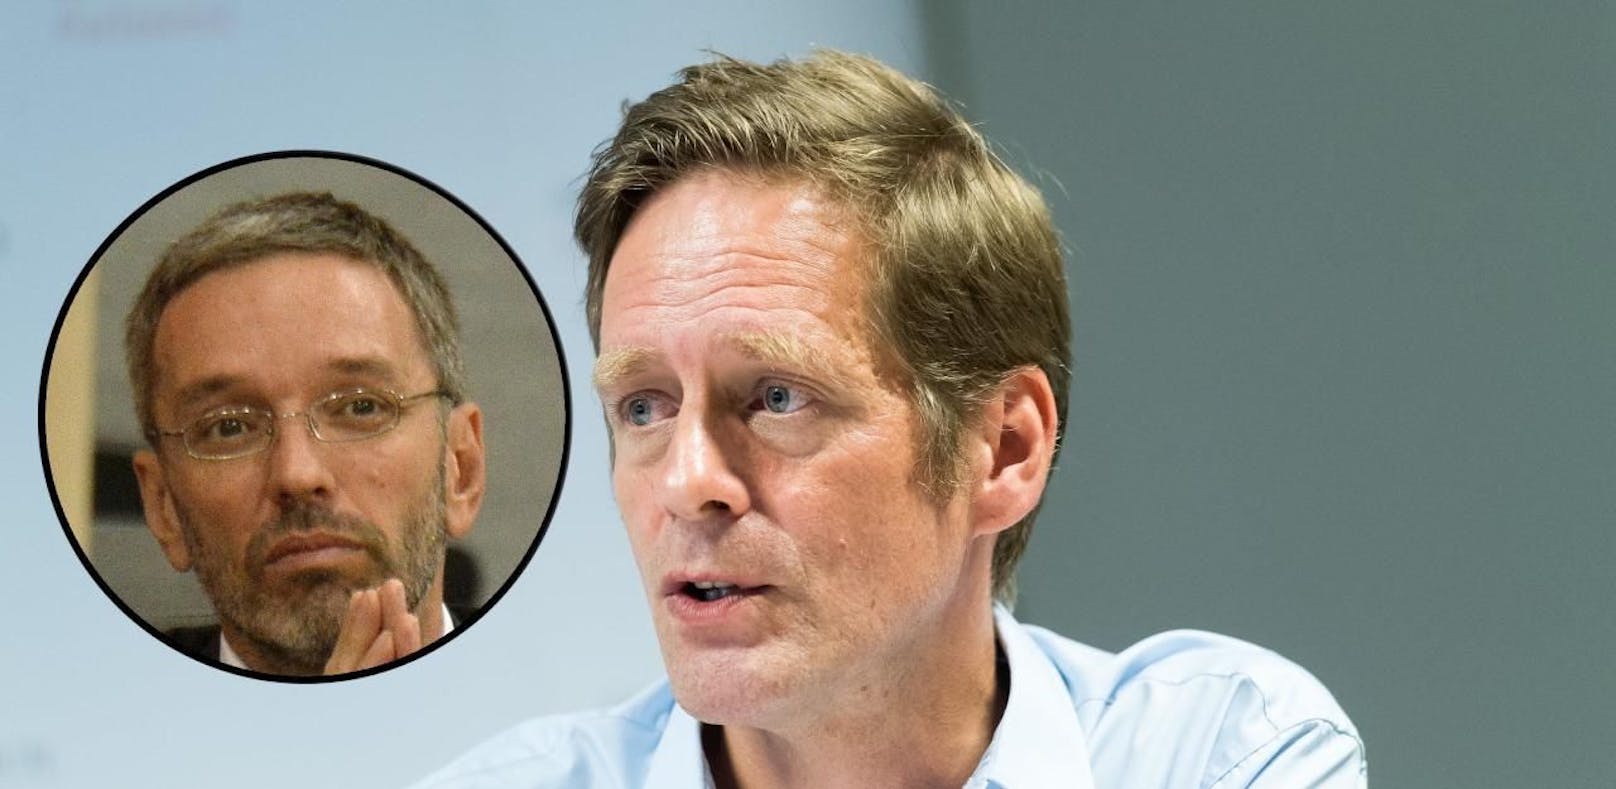 SPÖ-Fraktionsführer Jan Krainer kritisiert das Verhalten von Innenminister Herbert Kickl (FPÖ) scharf.